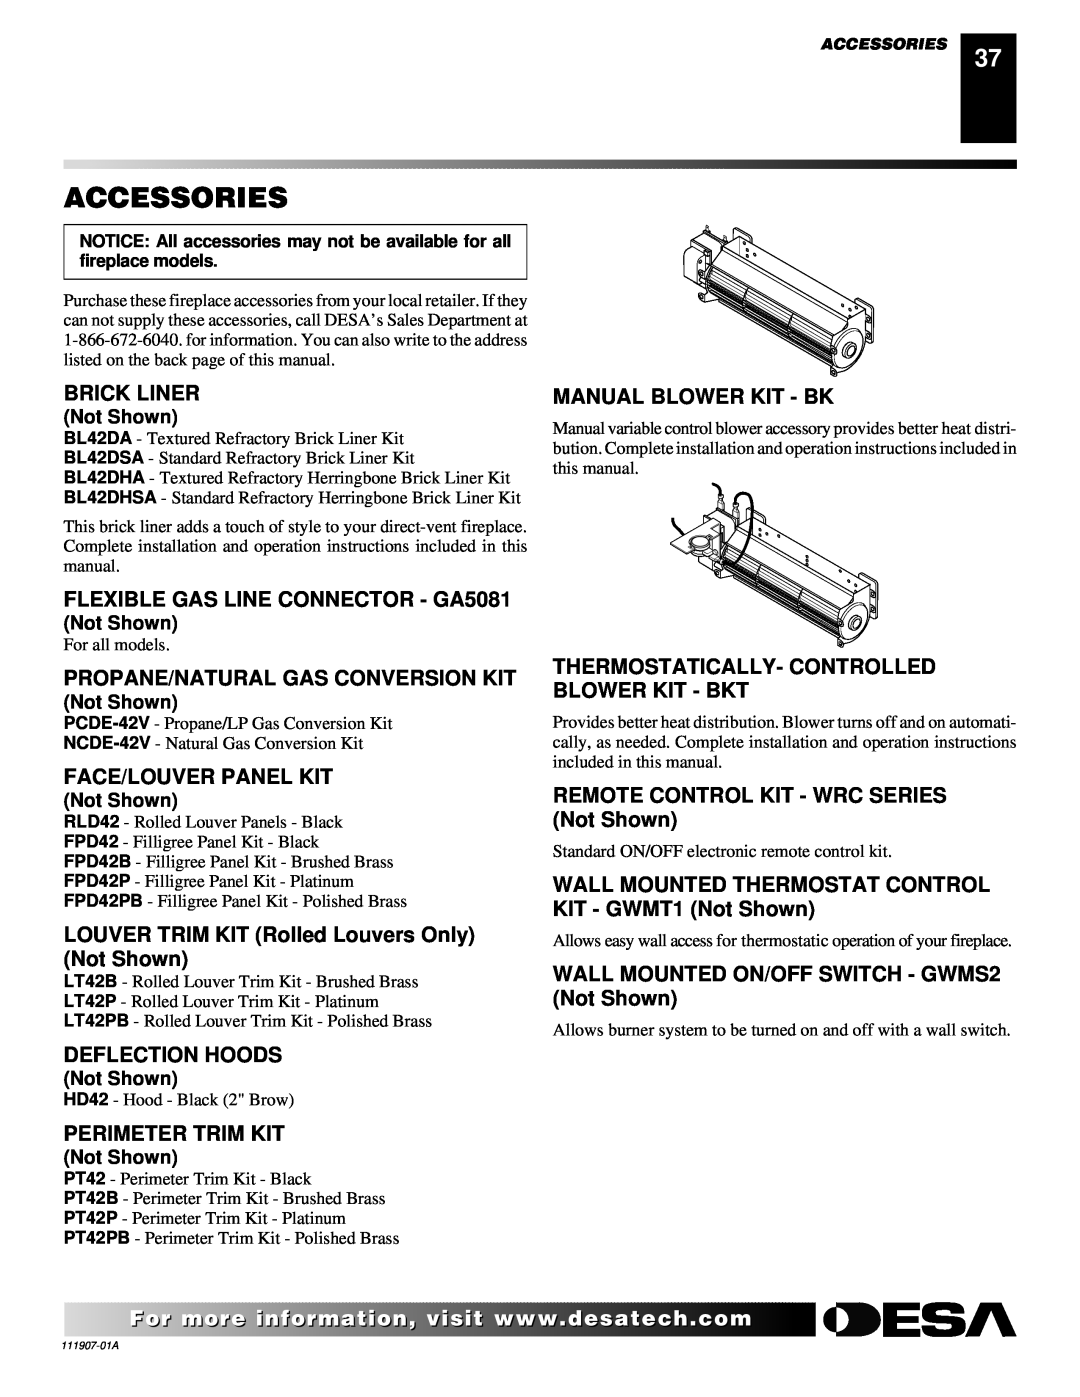 Desa (V)V42EPA(1) Accessories, Brick Liner, FLEXIBLE GAS LINE CONNECTOR - GA5081, Propane/Natural Gas Conversion Kit 